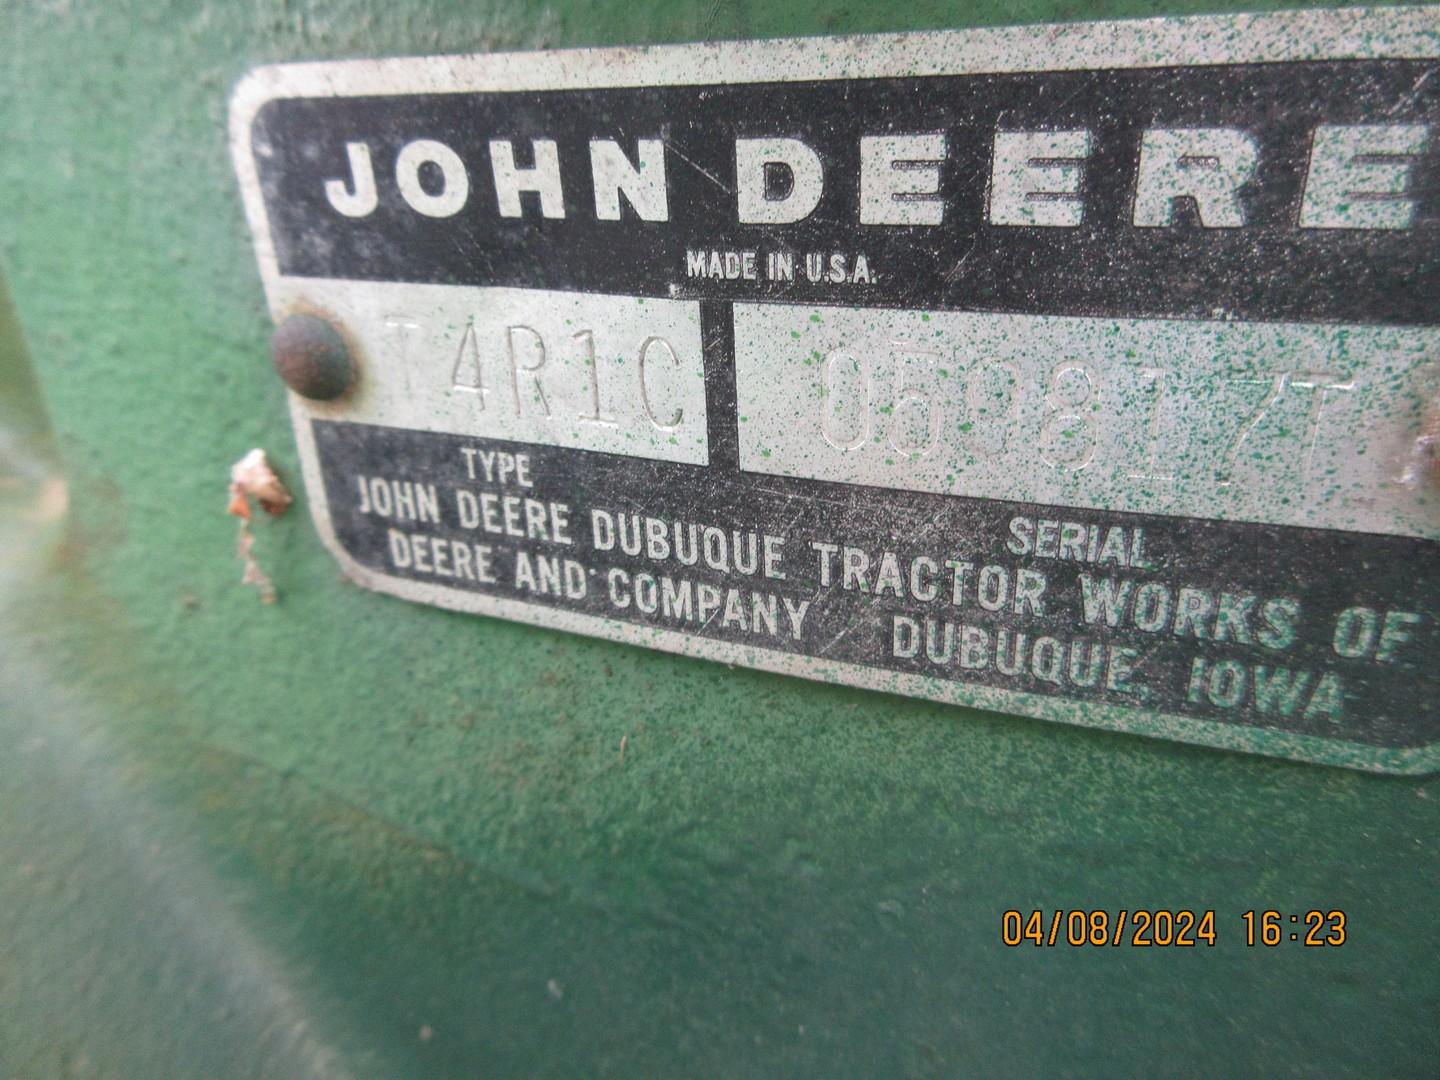 John Deere 1020 AG Tractor